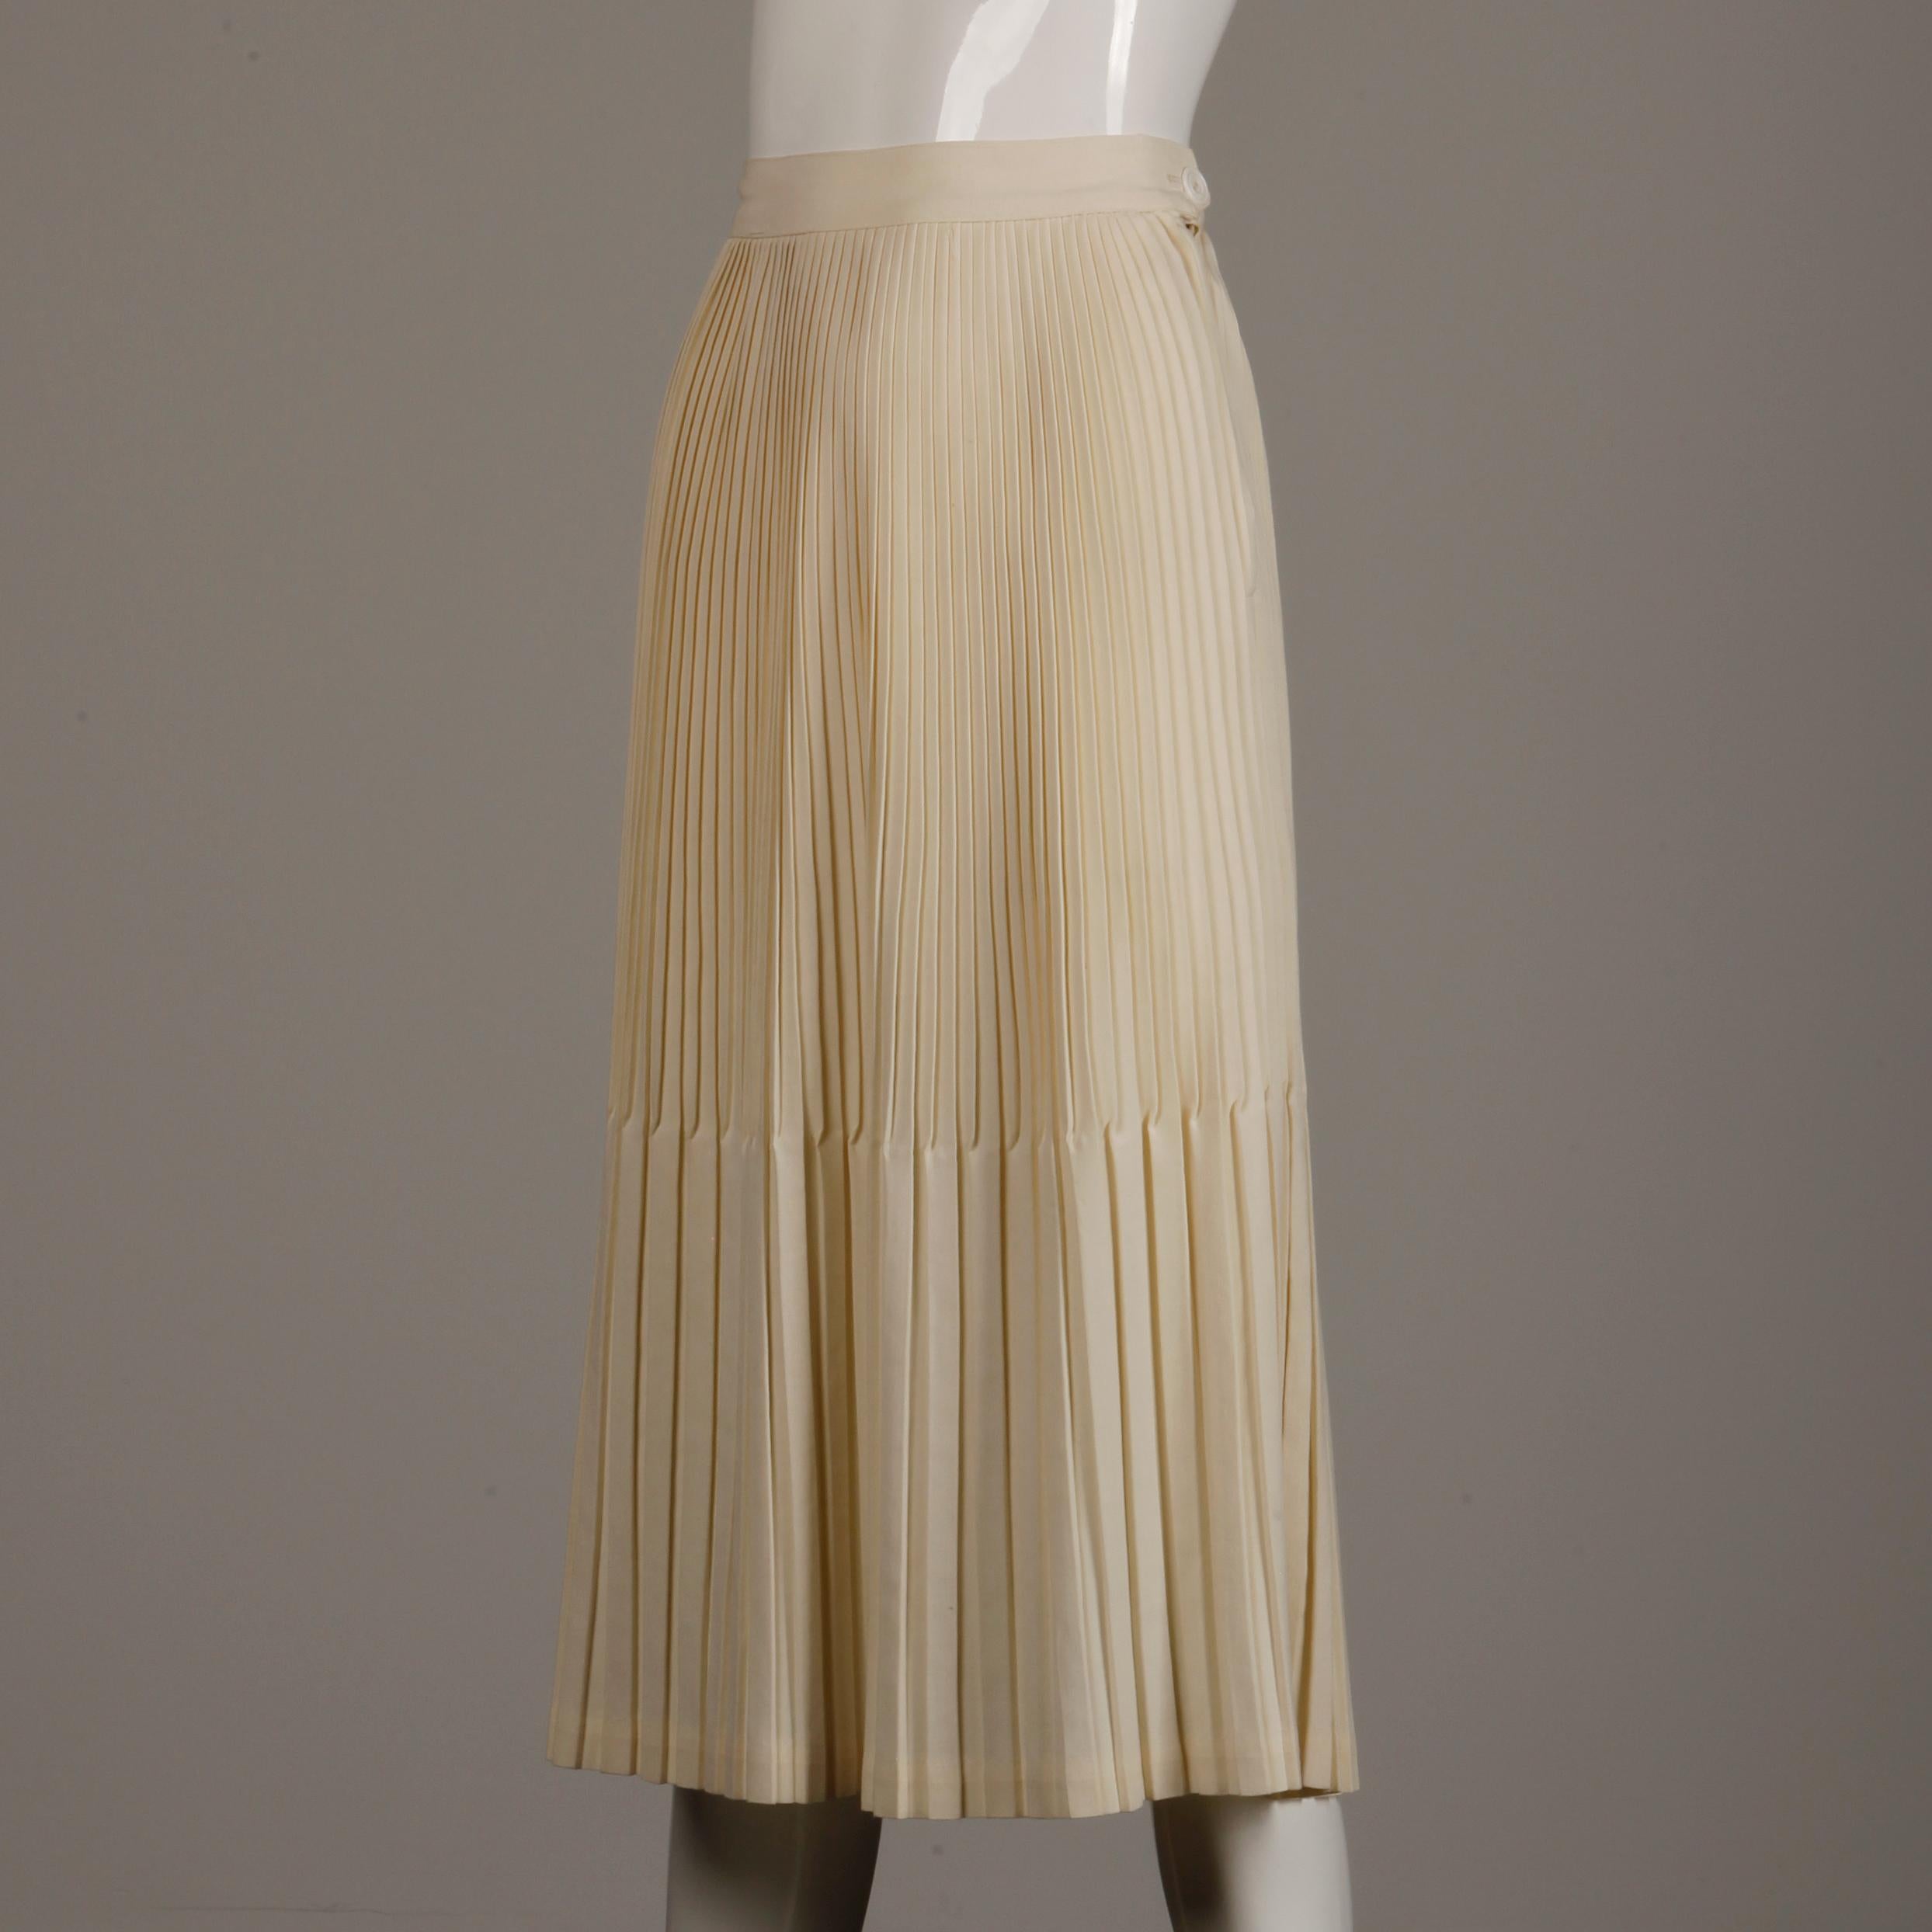 1940s Vintage Off White/ Cream Cotton Pleated High Waist Pencil Skirt 1